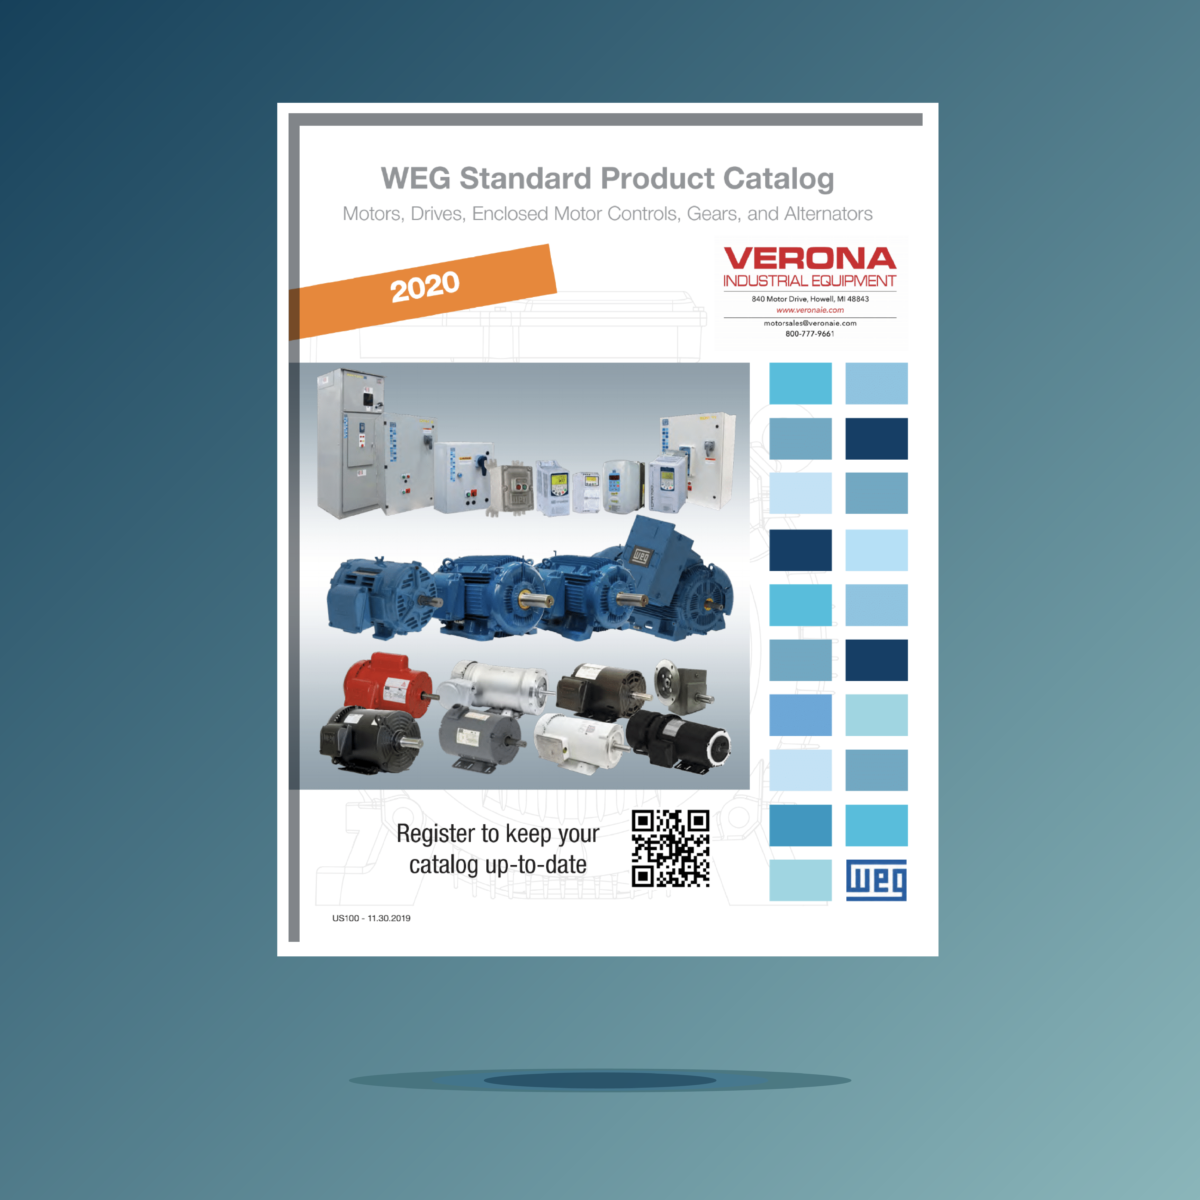 WEG motors drives controls gears alternators-standard product catalog cover-01